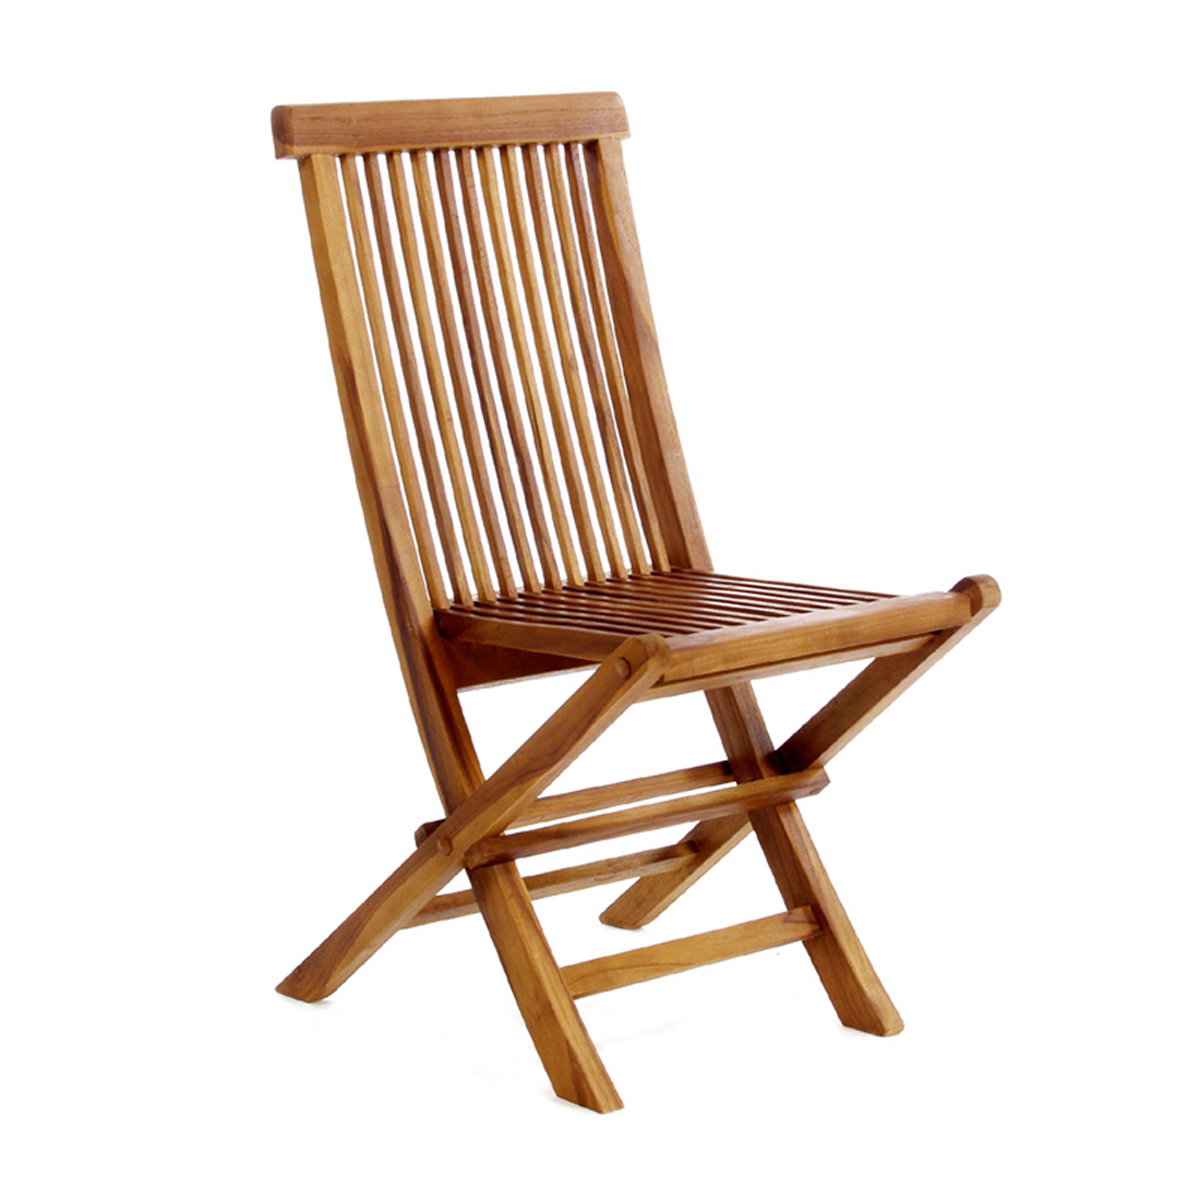 Teak Outdoor Chairs Furniture